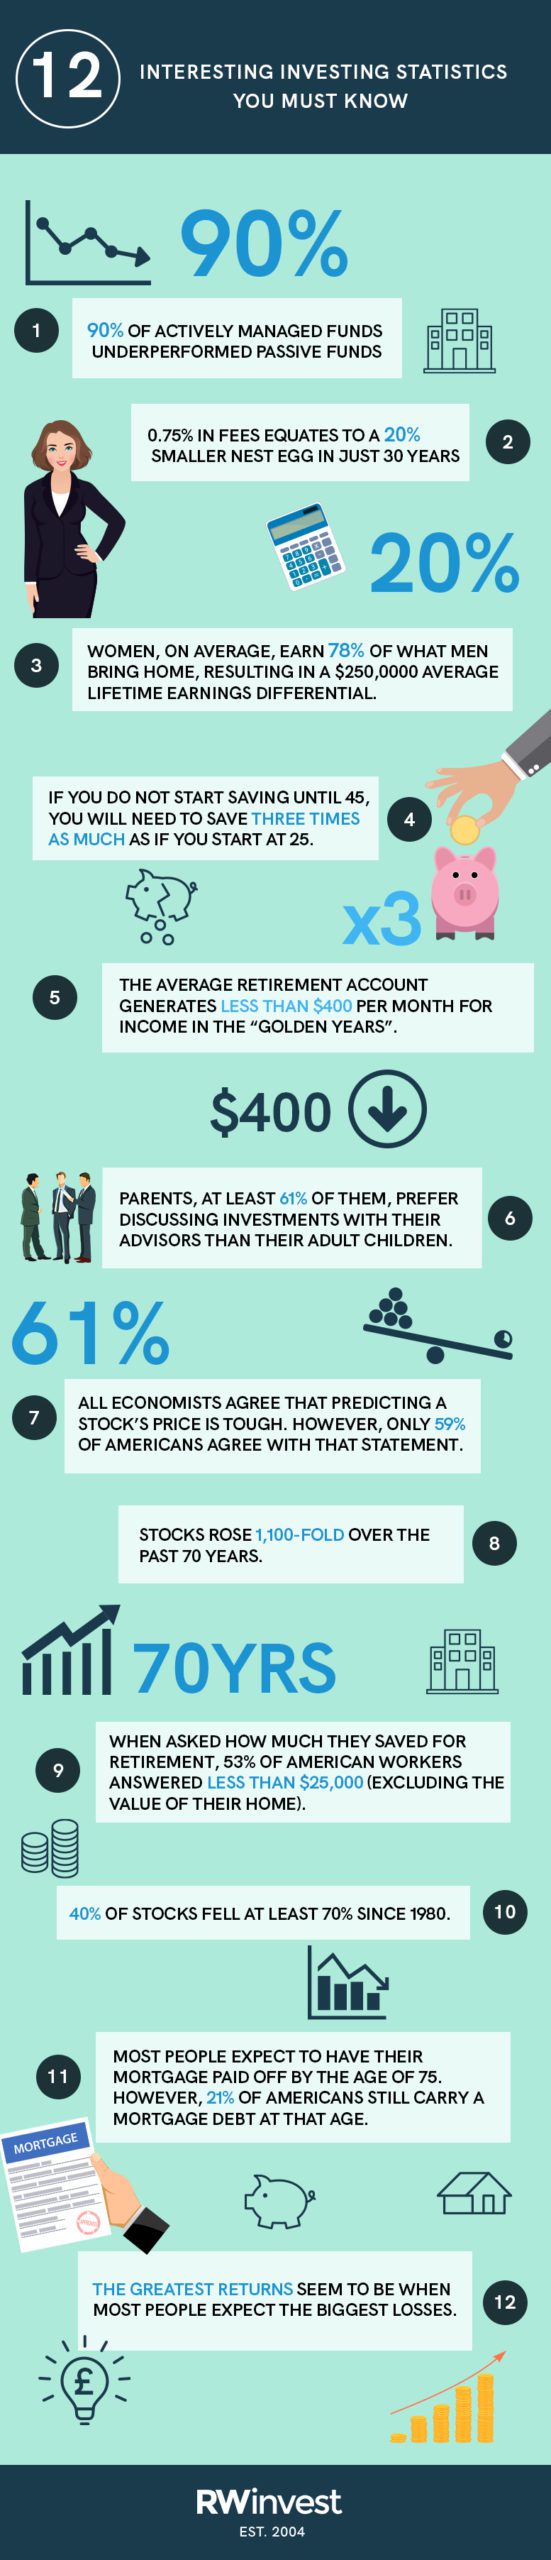 12 Investing Statistics infographic